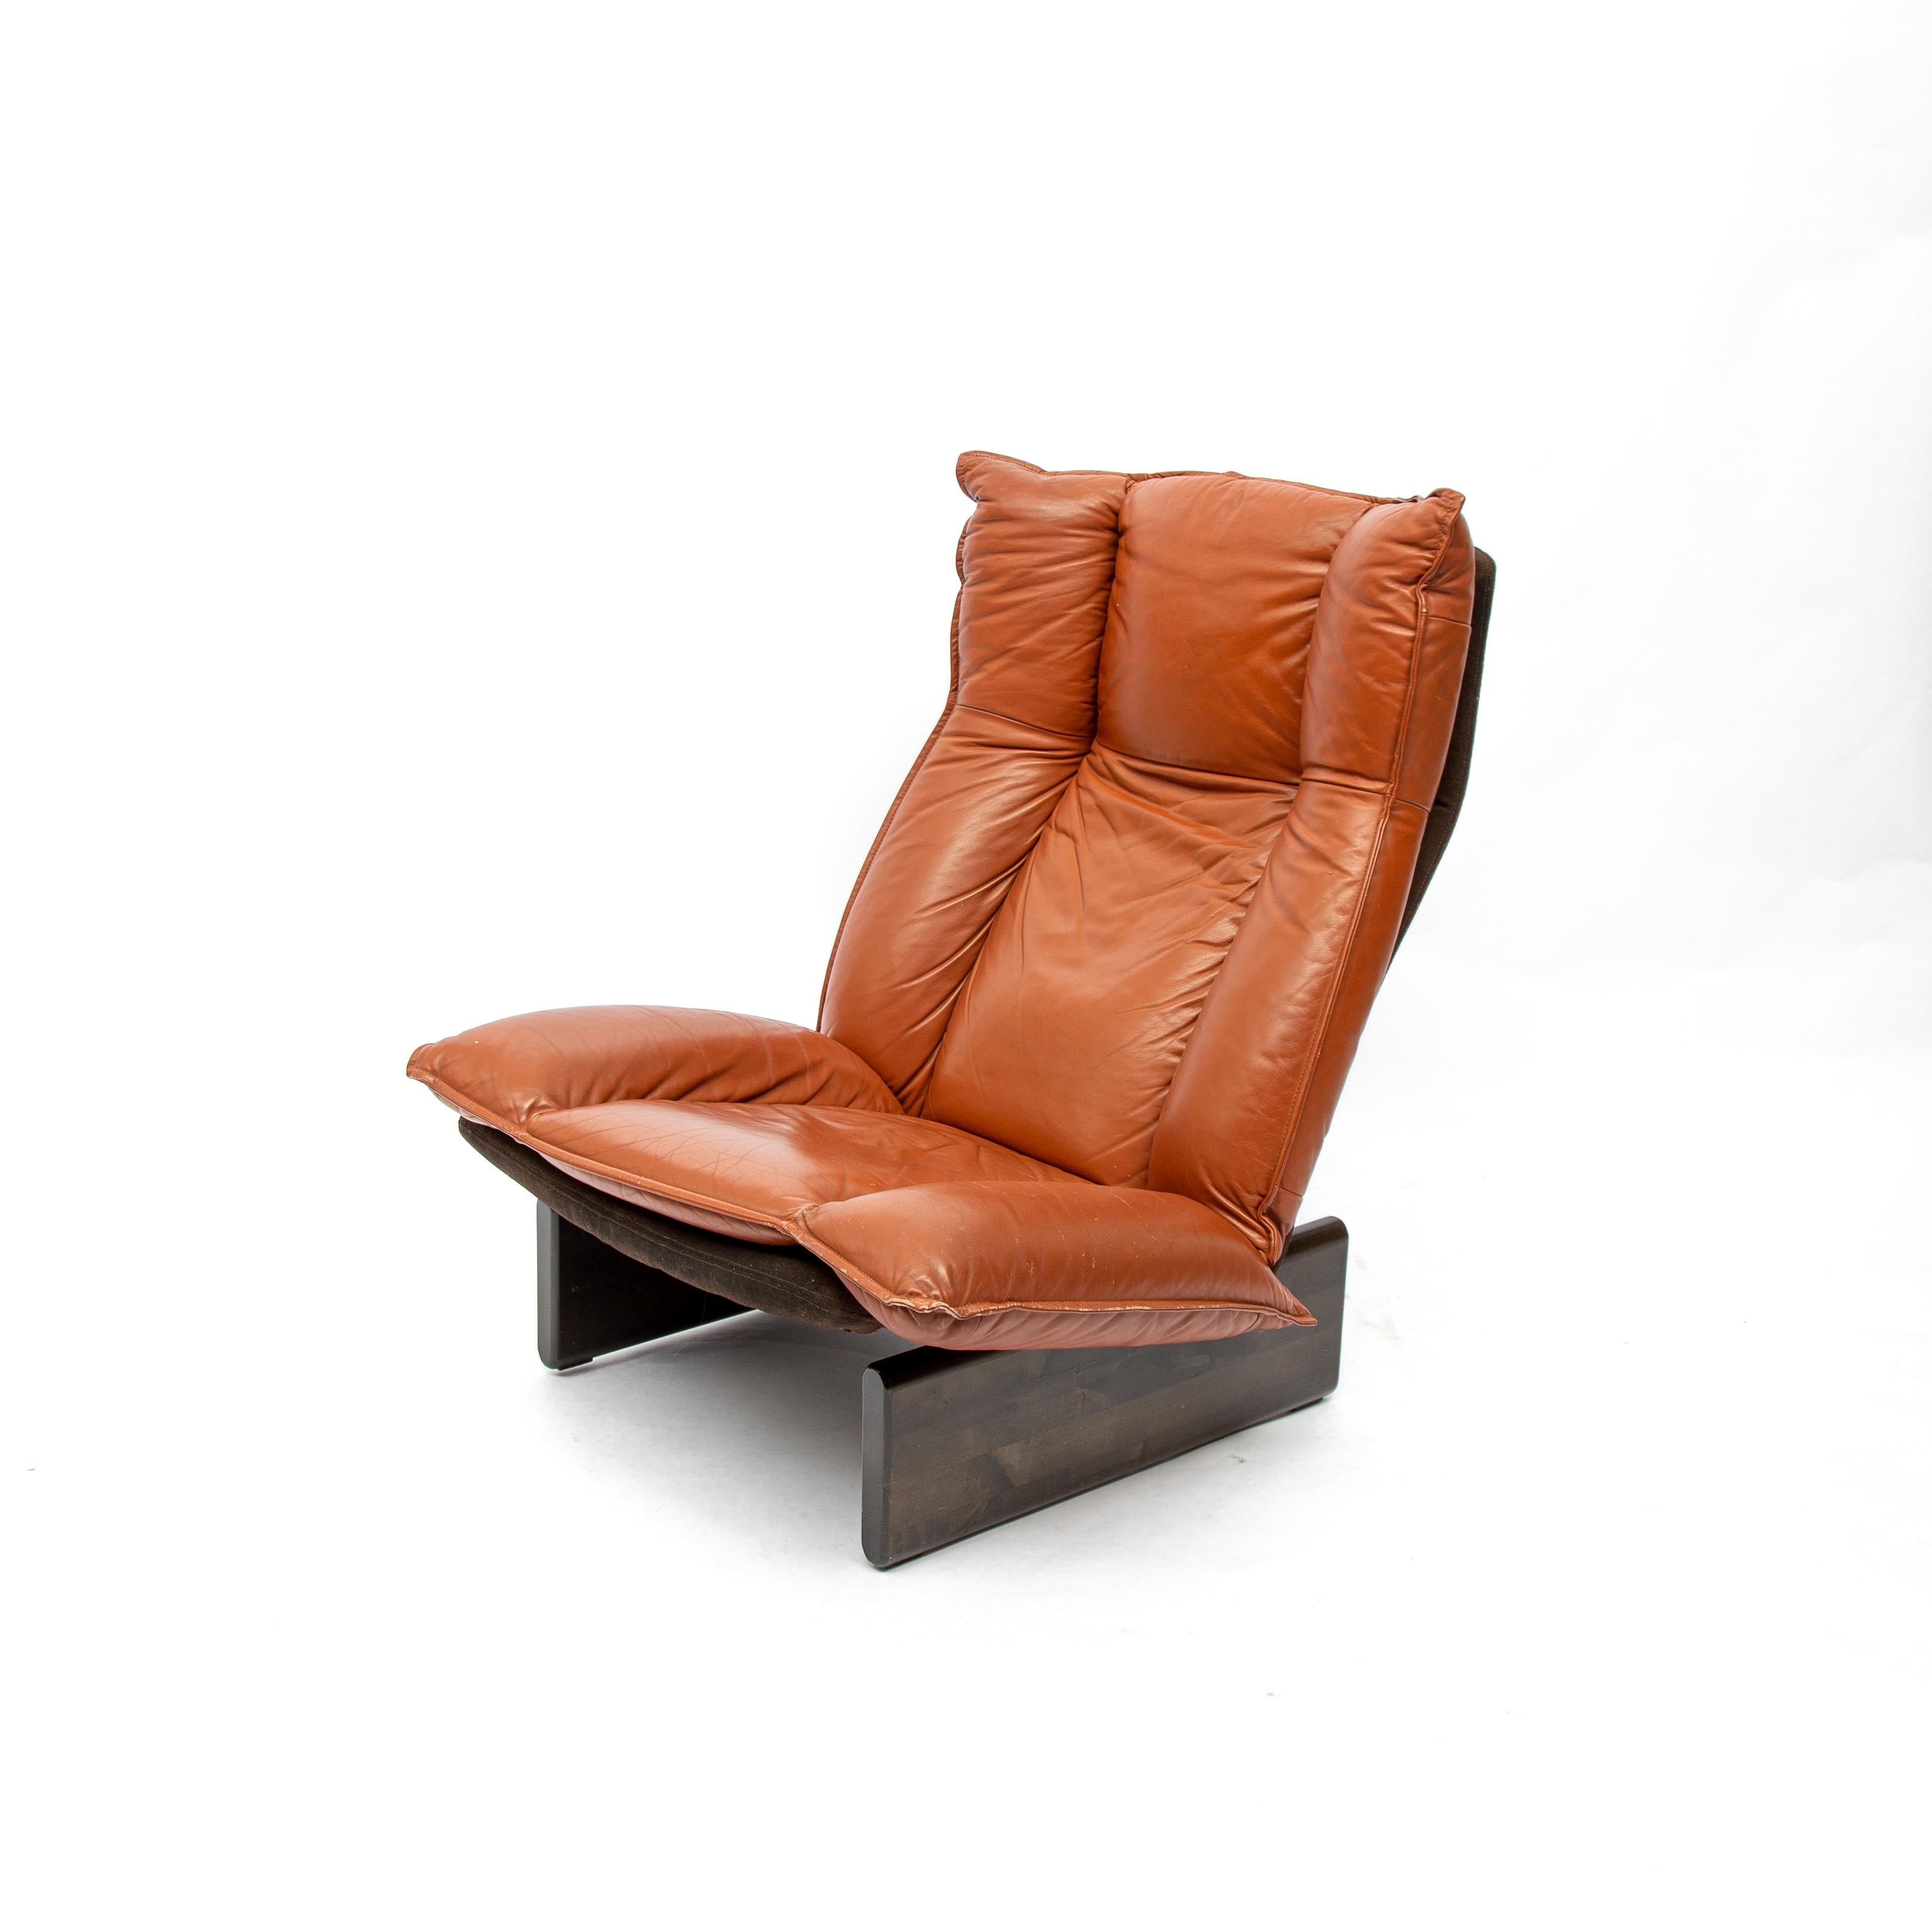 Mid-Century Modern Cognac Leolux Leather And Wood Lounge Chair, Dutch Modern, 1970s